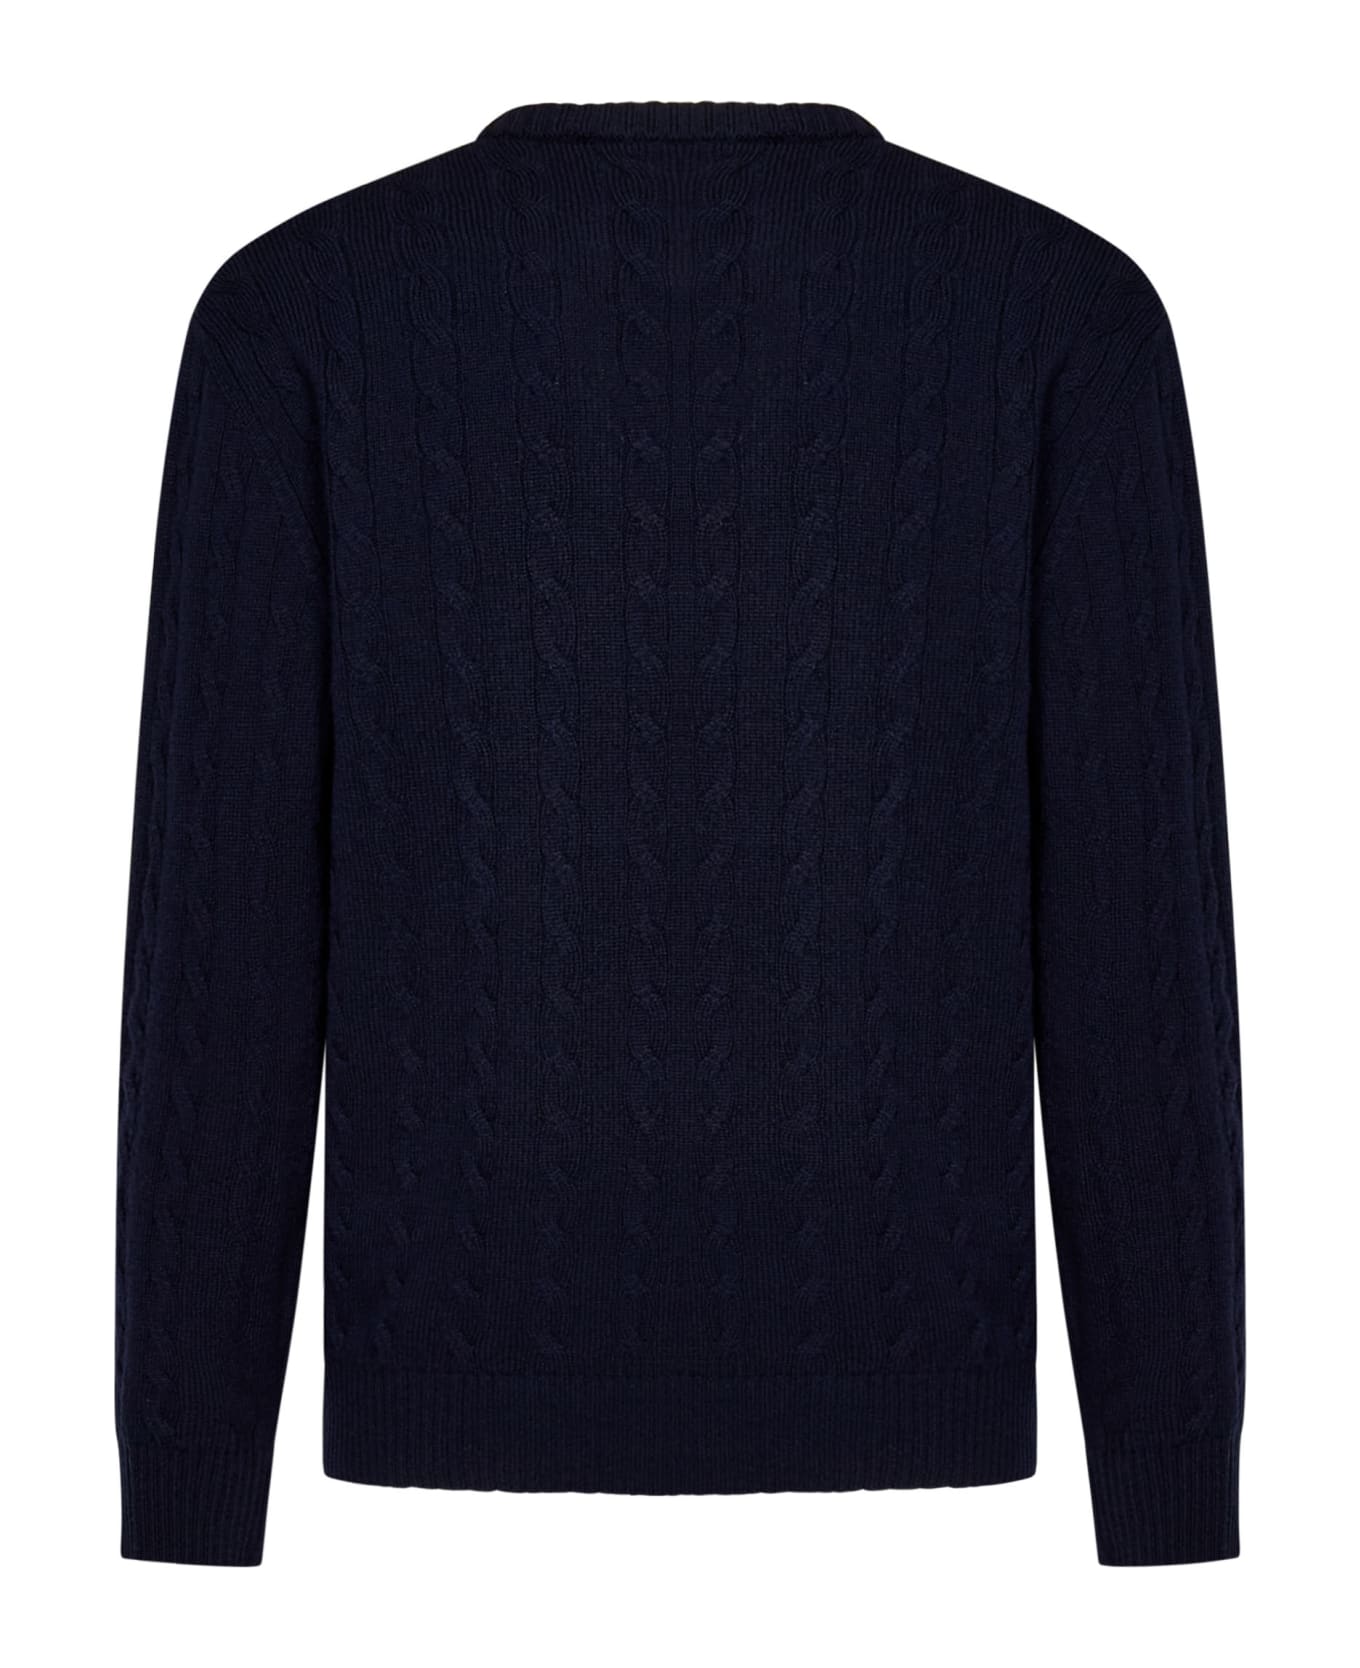 Lacoste Sweater - Blue